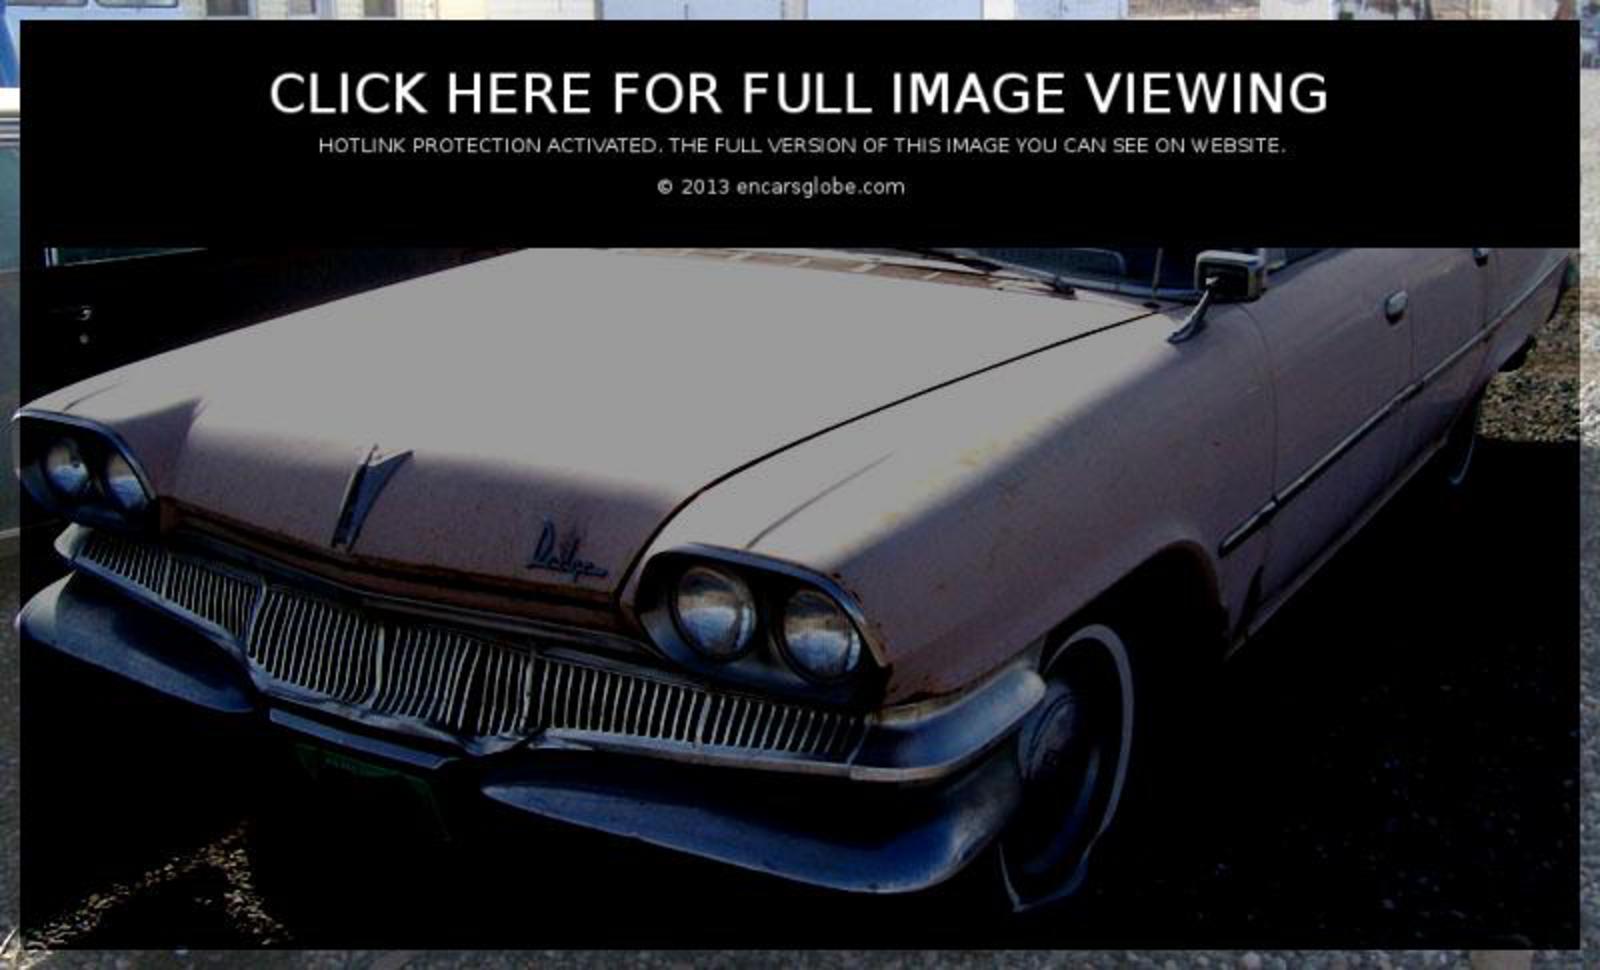 Dodge Dart Seneca 4dr sedan (02 image) Size: 800 x 485 px | 13145 views